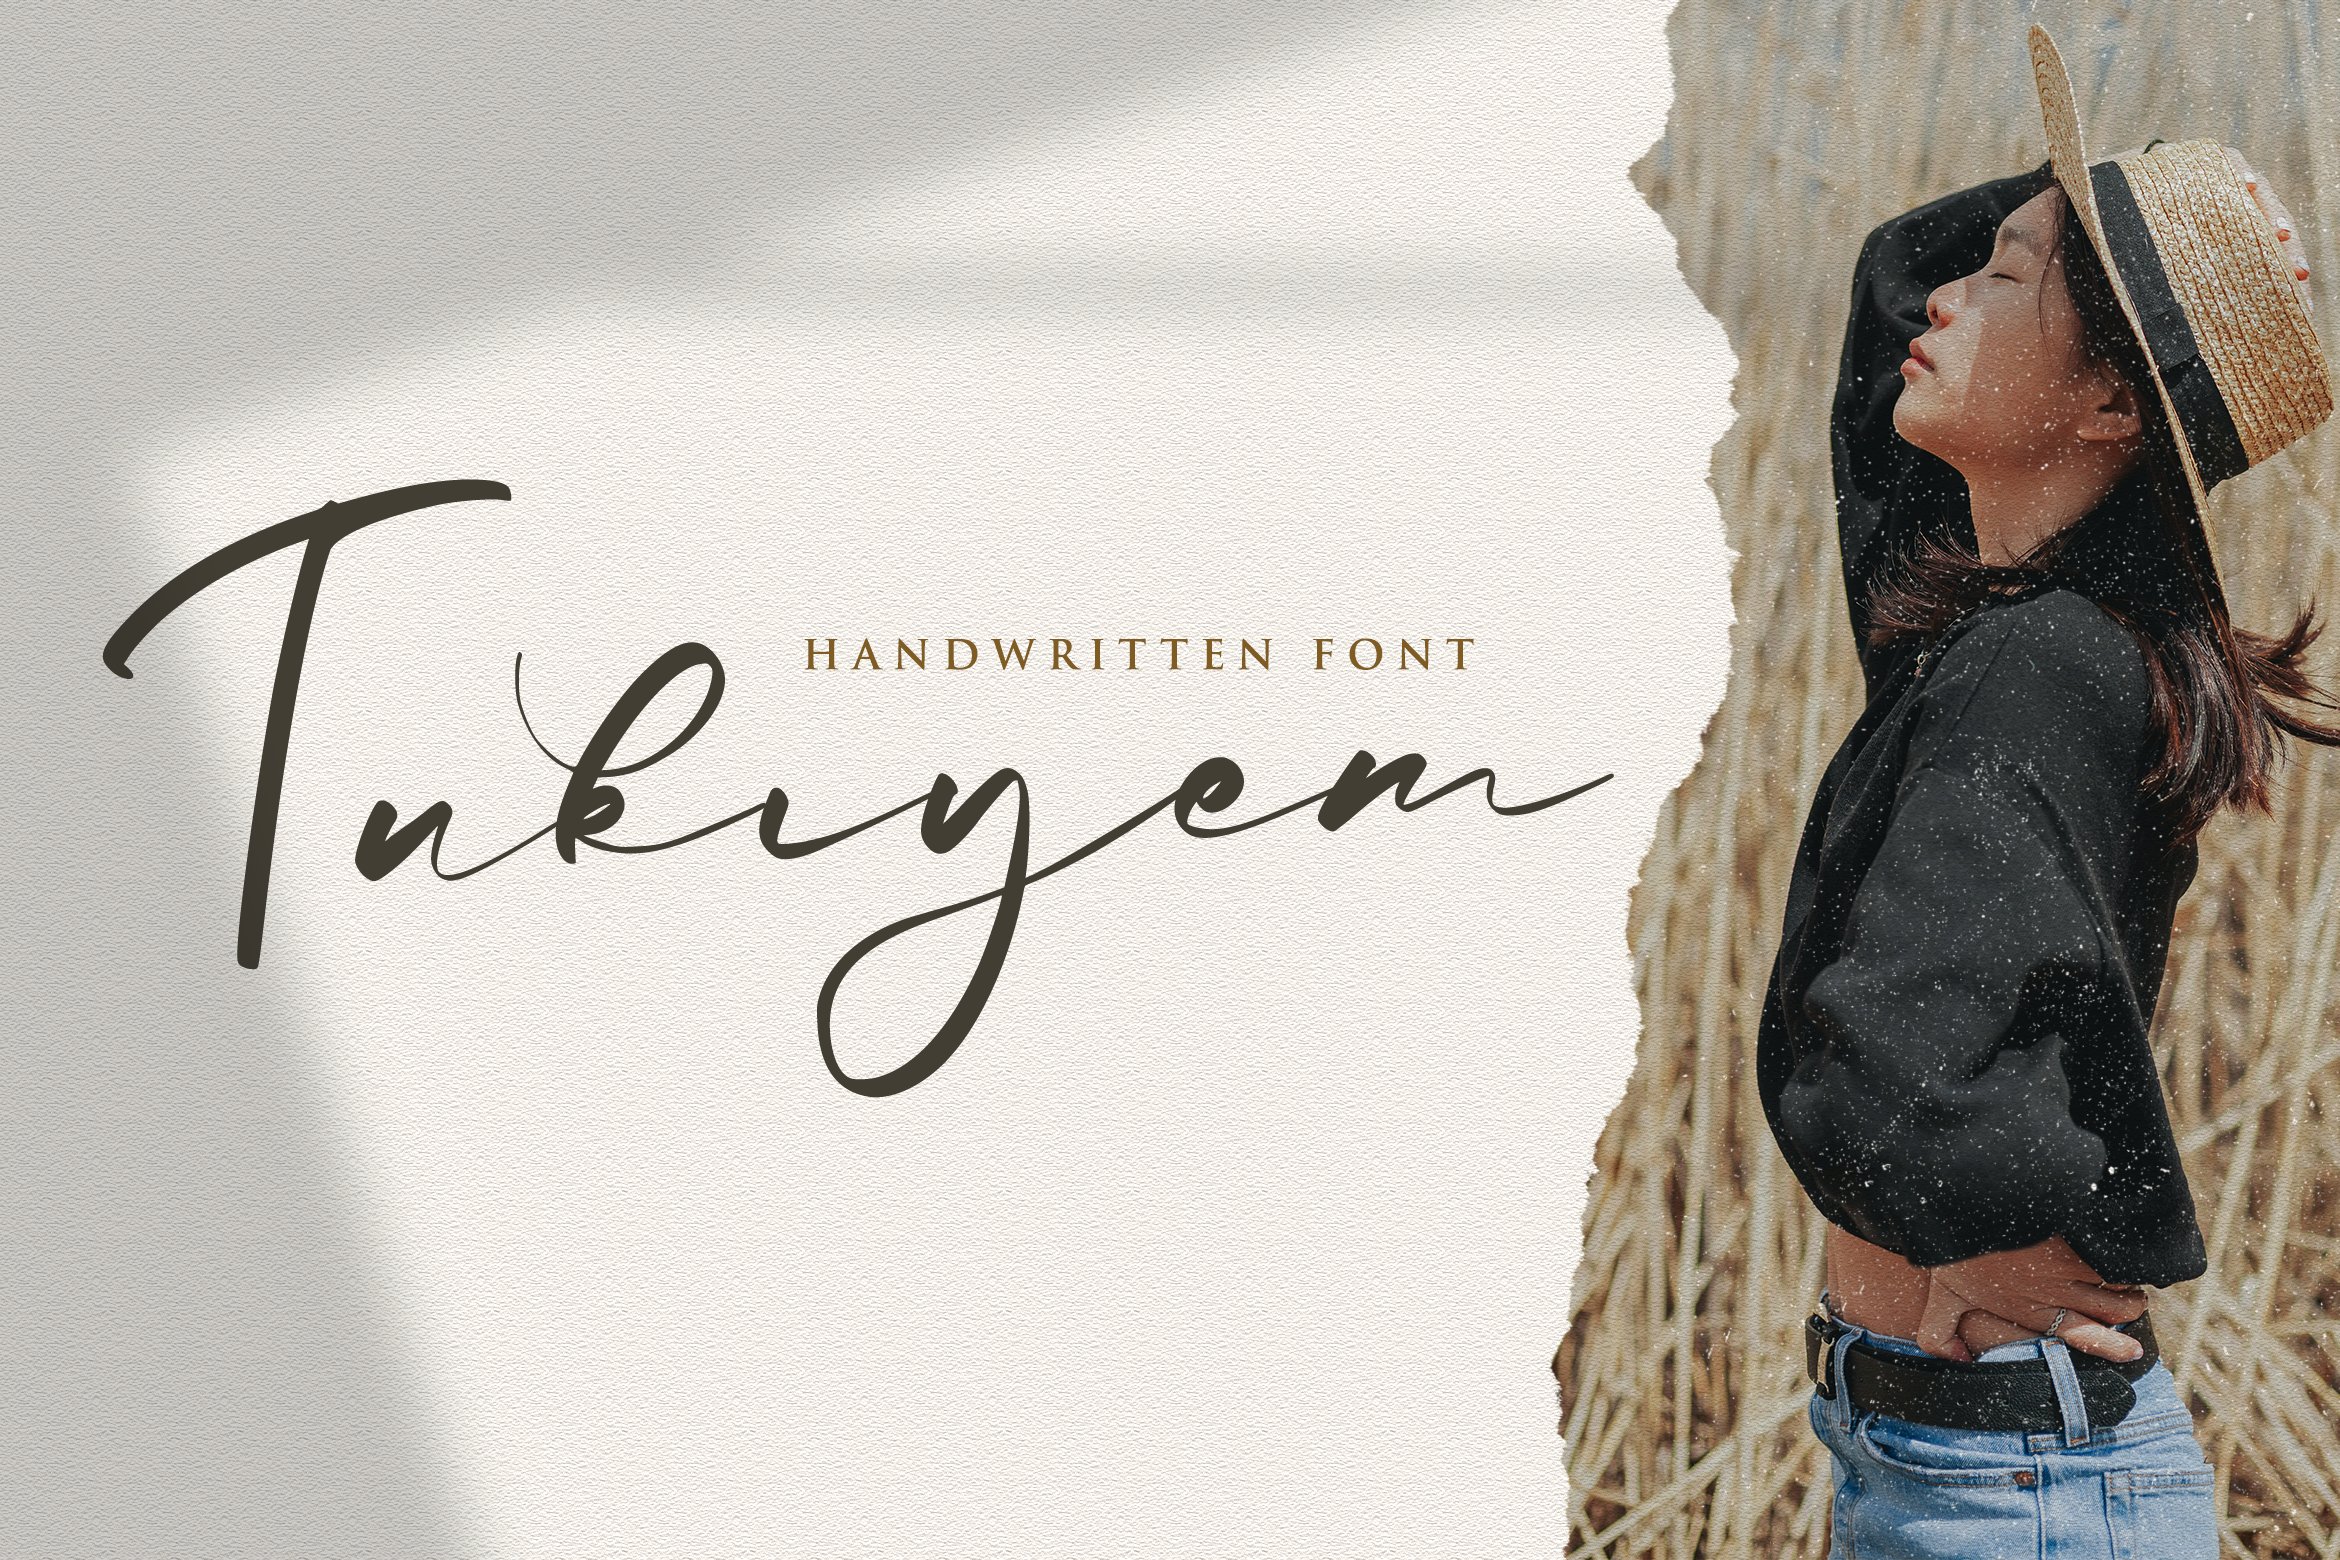 Tukiyem - Handwritten Font cover image.